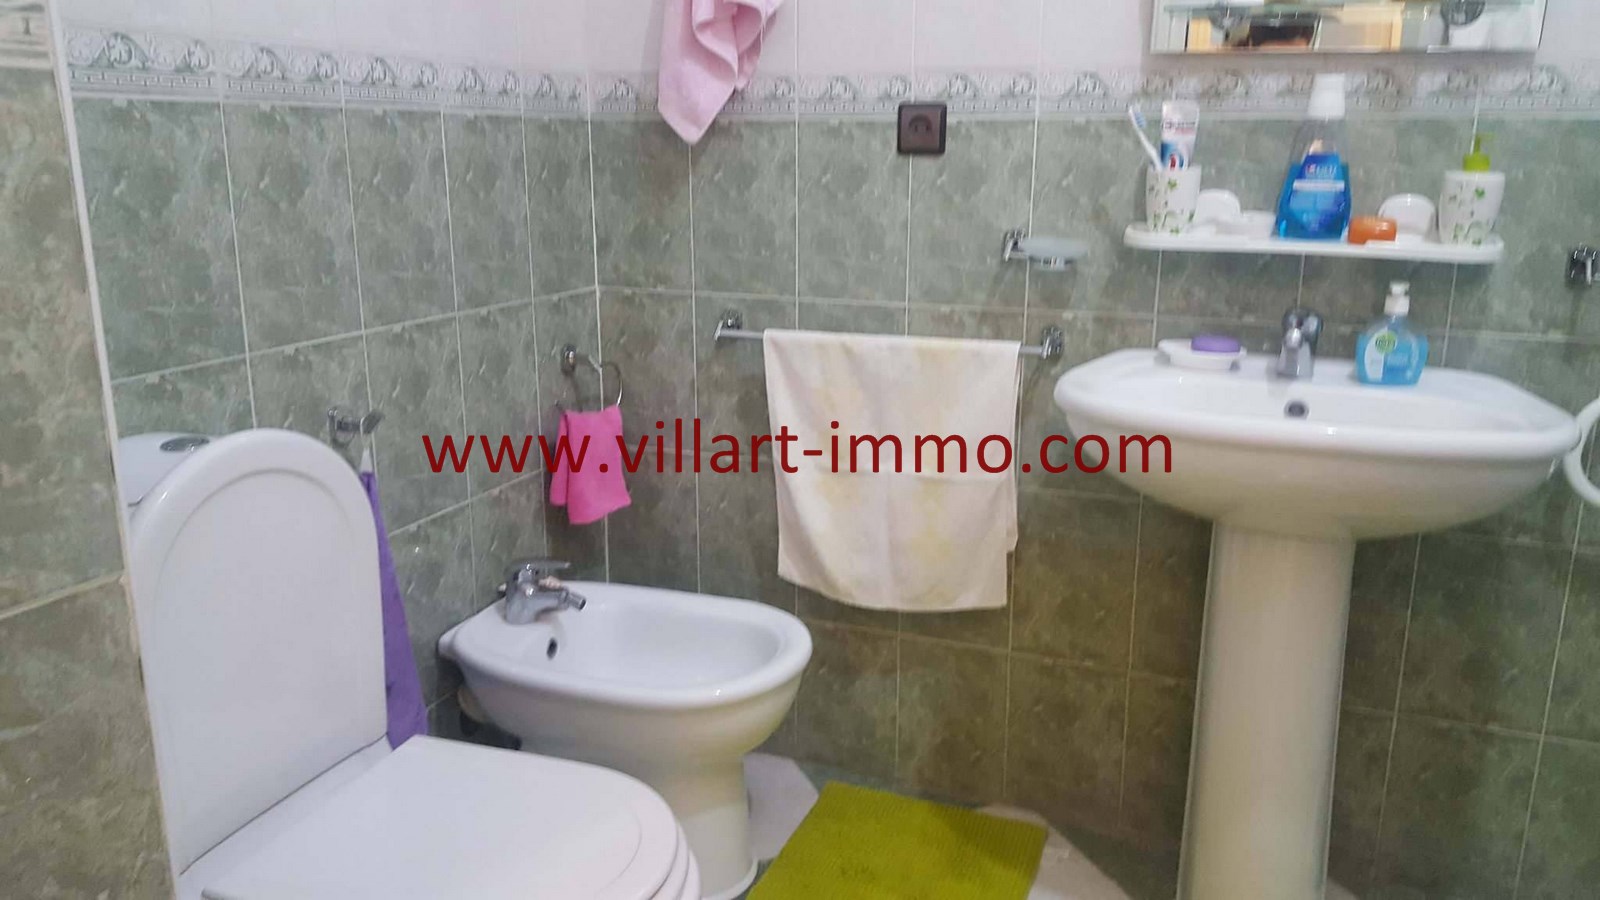 10-Vente-Appartement-Centre-ville-Tanger-Salle de bain-VA531-Villart Immo